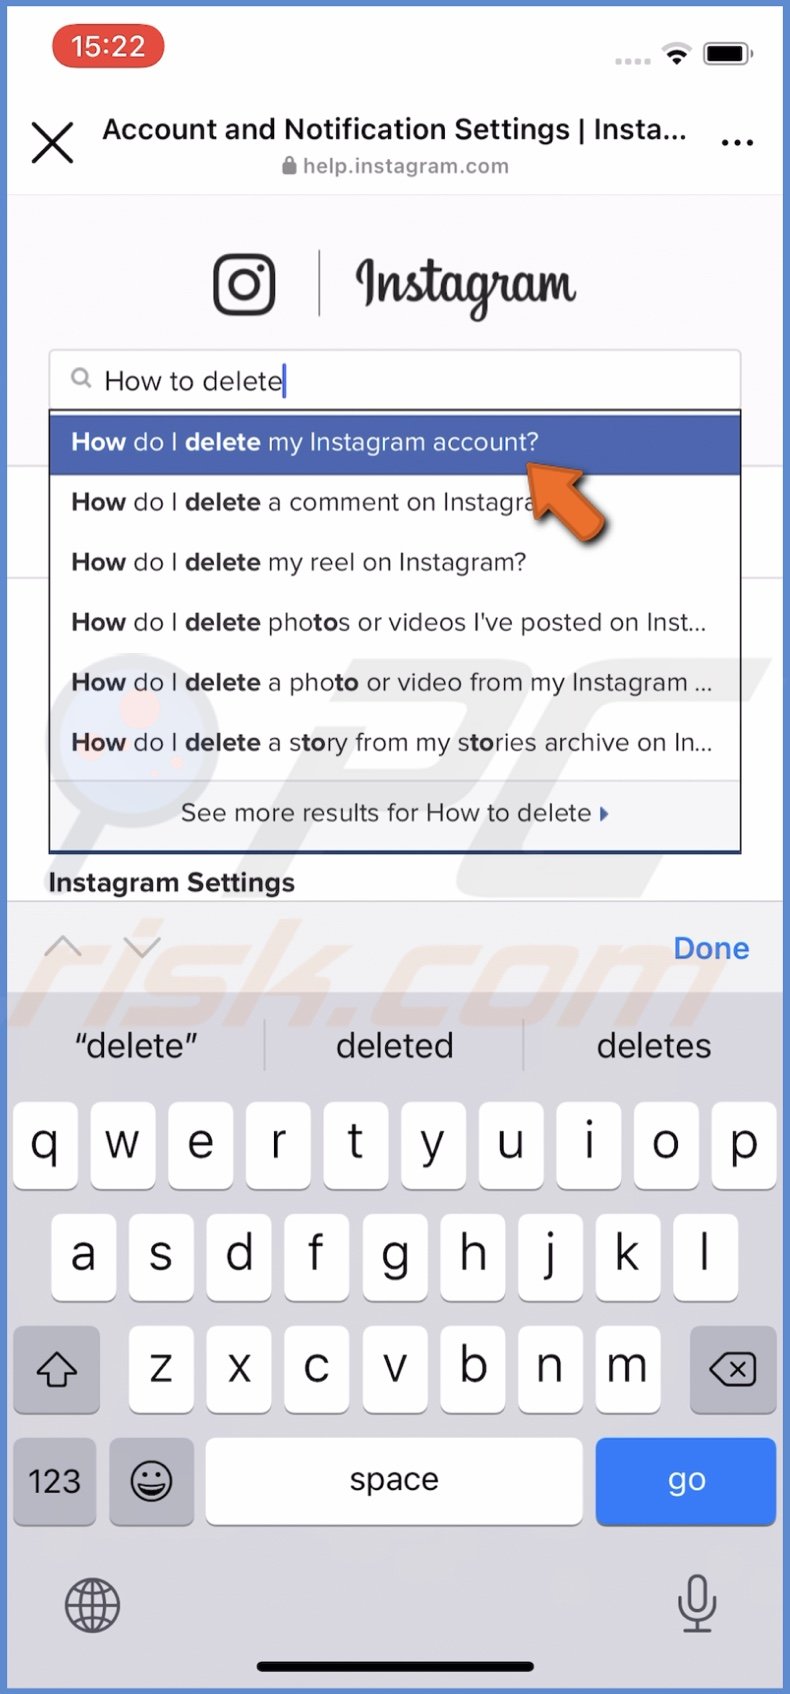 Enter How do I delete my Instagram account